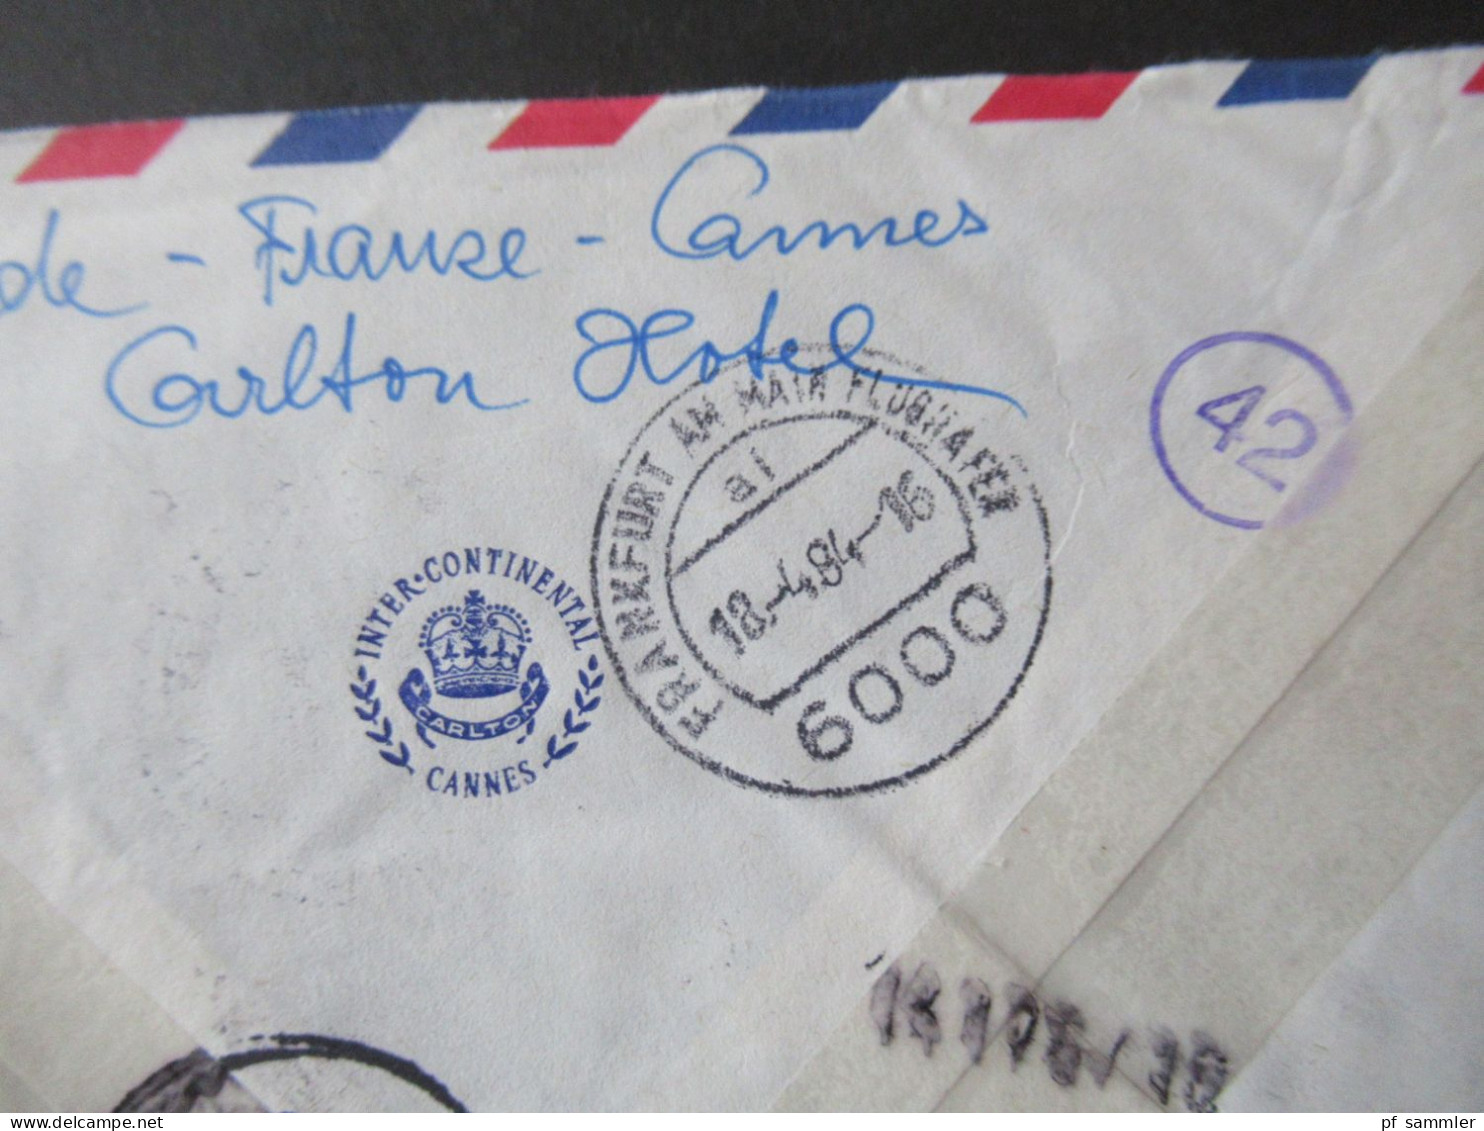 Frankreich 1984 Par Avion Expres Cannes - Kassel / Stempel Frankfurt Am Main Flughafen / Umschlag Inter Continental - Lettres & Documents